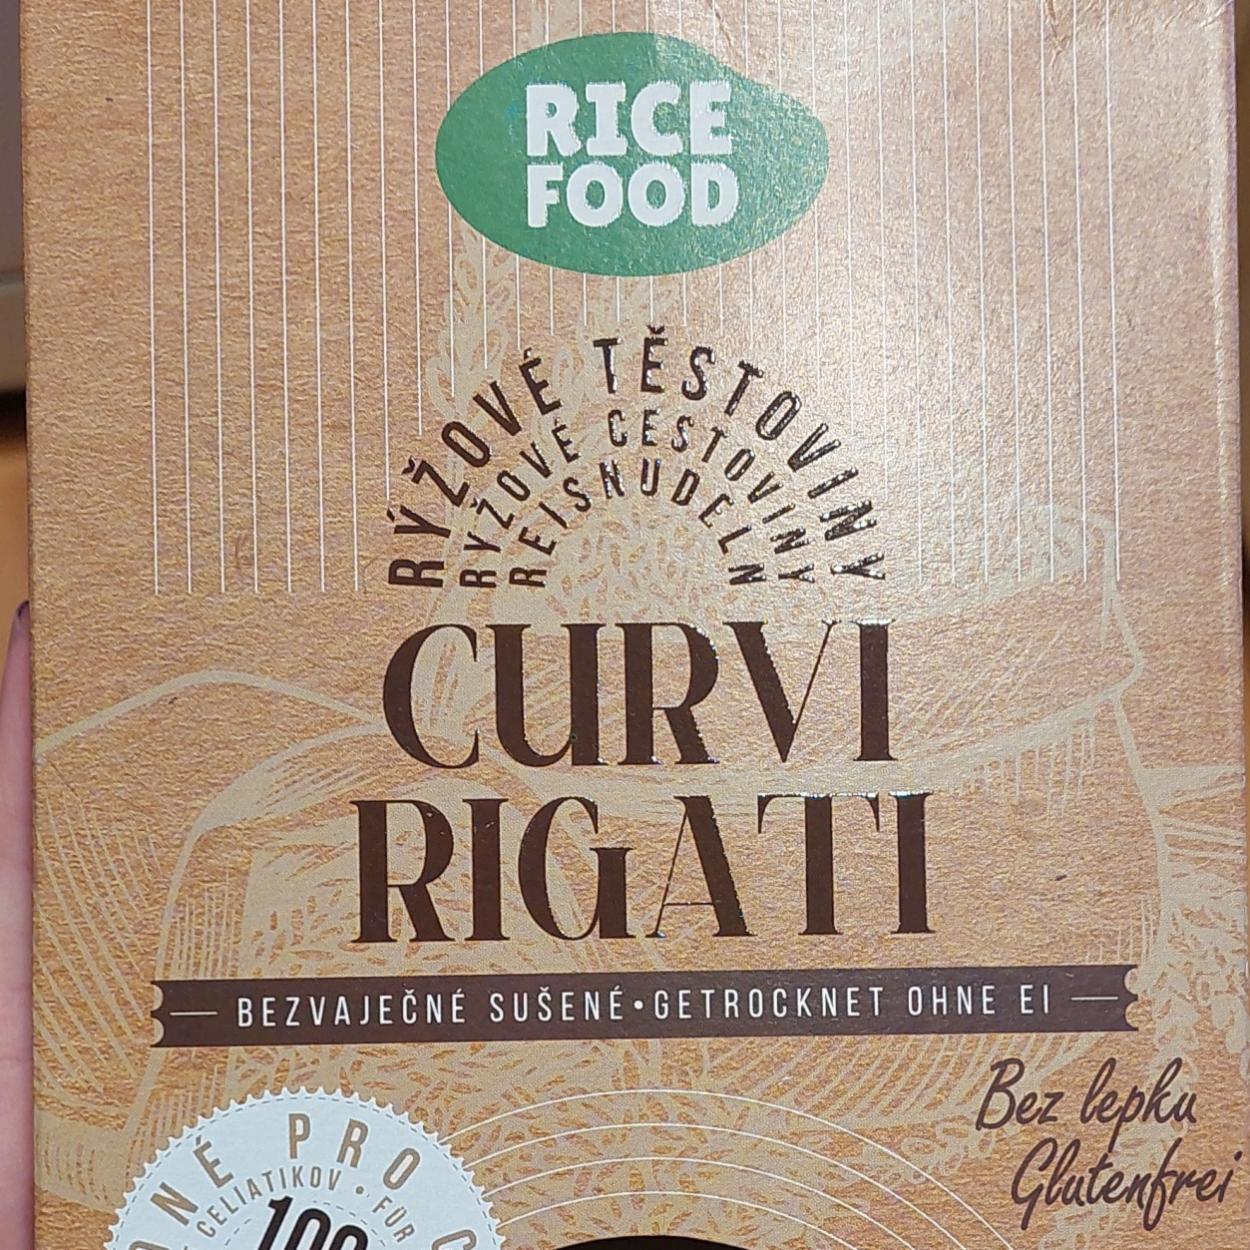 Fotografie - Rýžové těstoviny Curvi Rigati Rice food